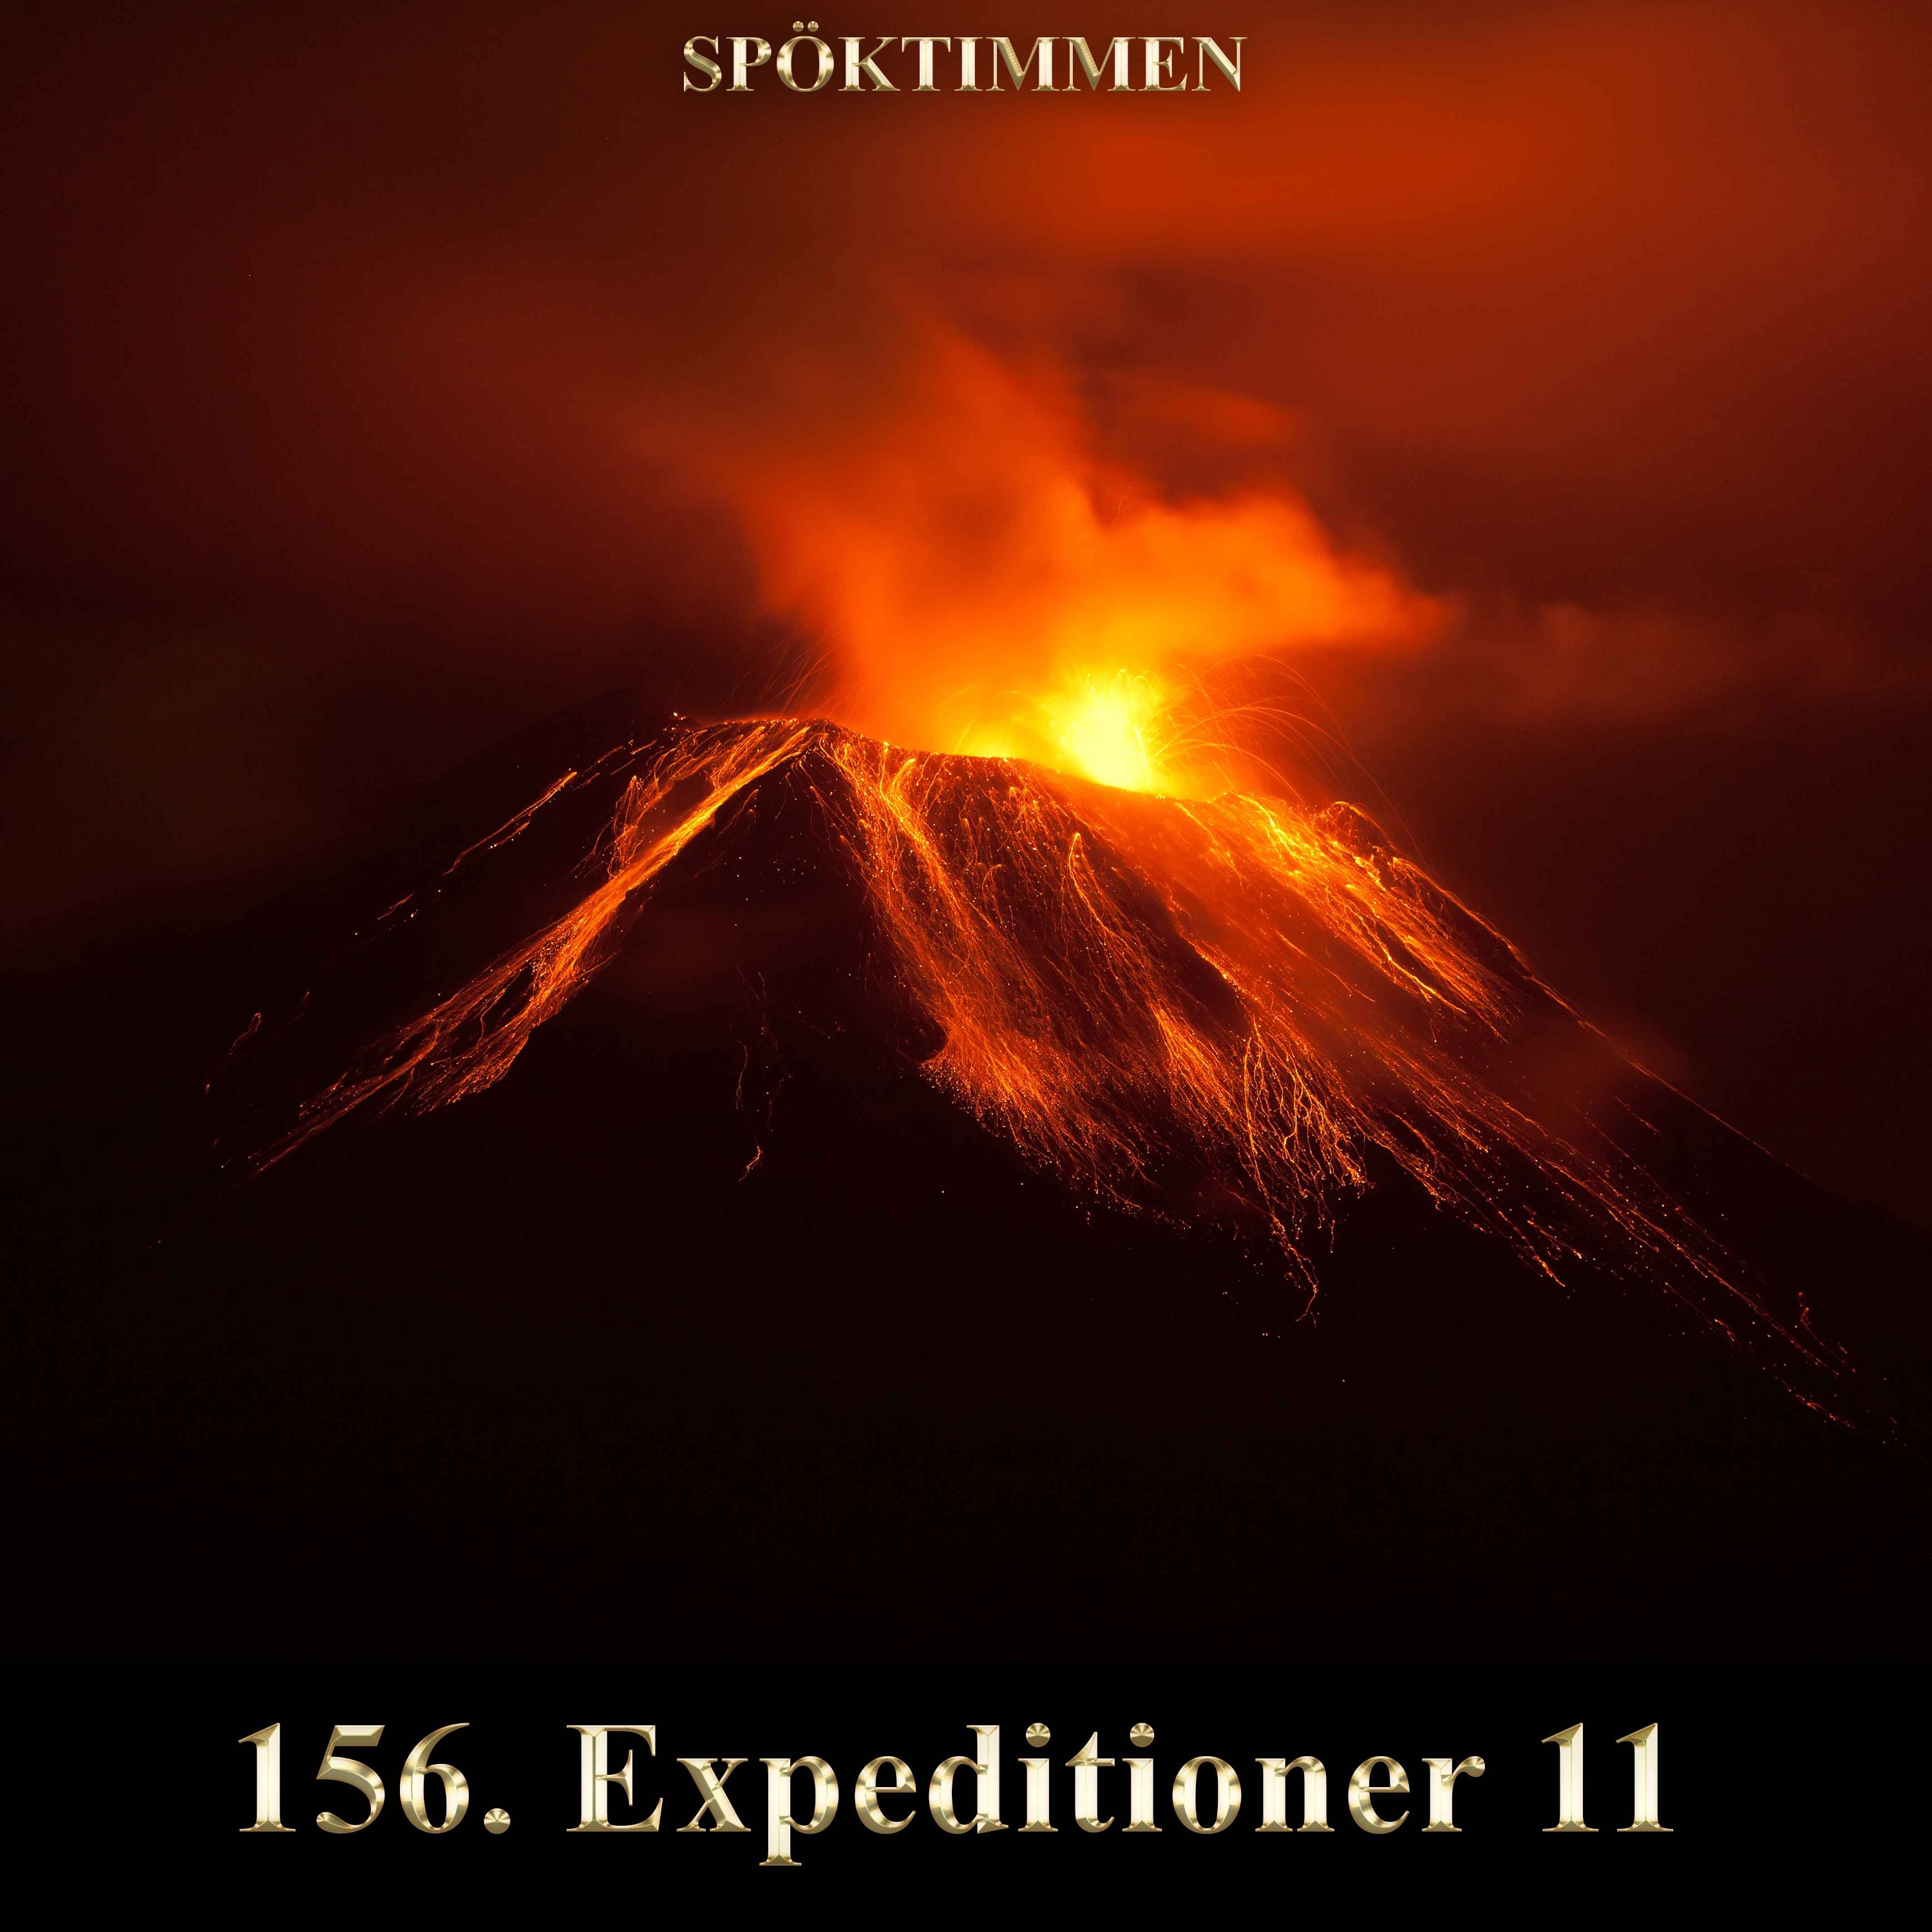 Expeditioner 11